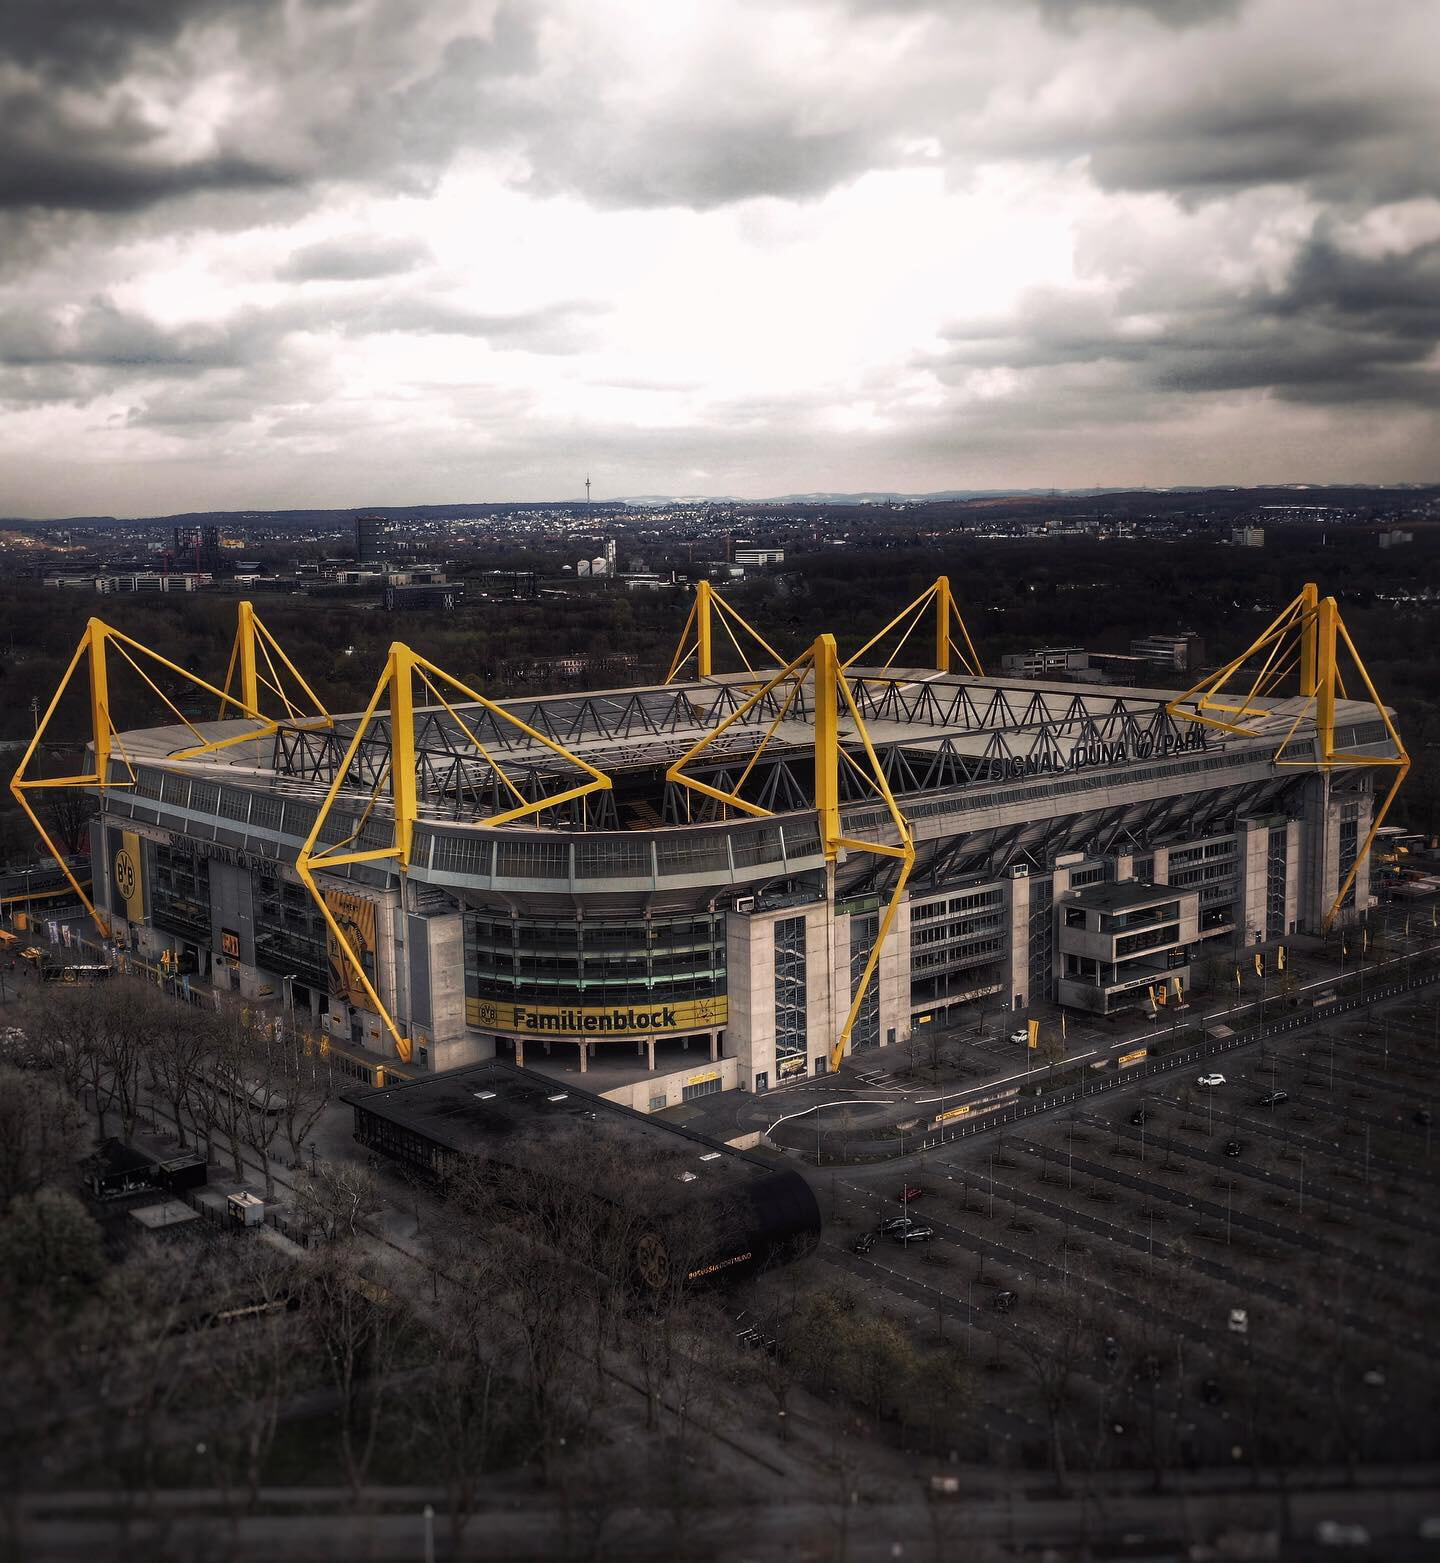 Dortmunde